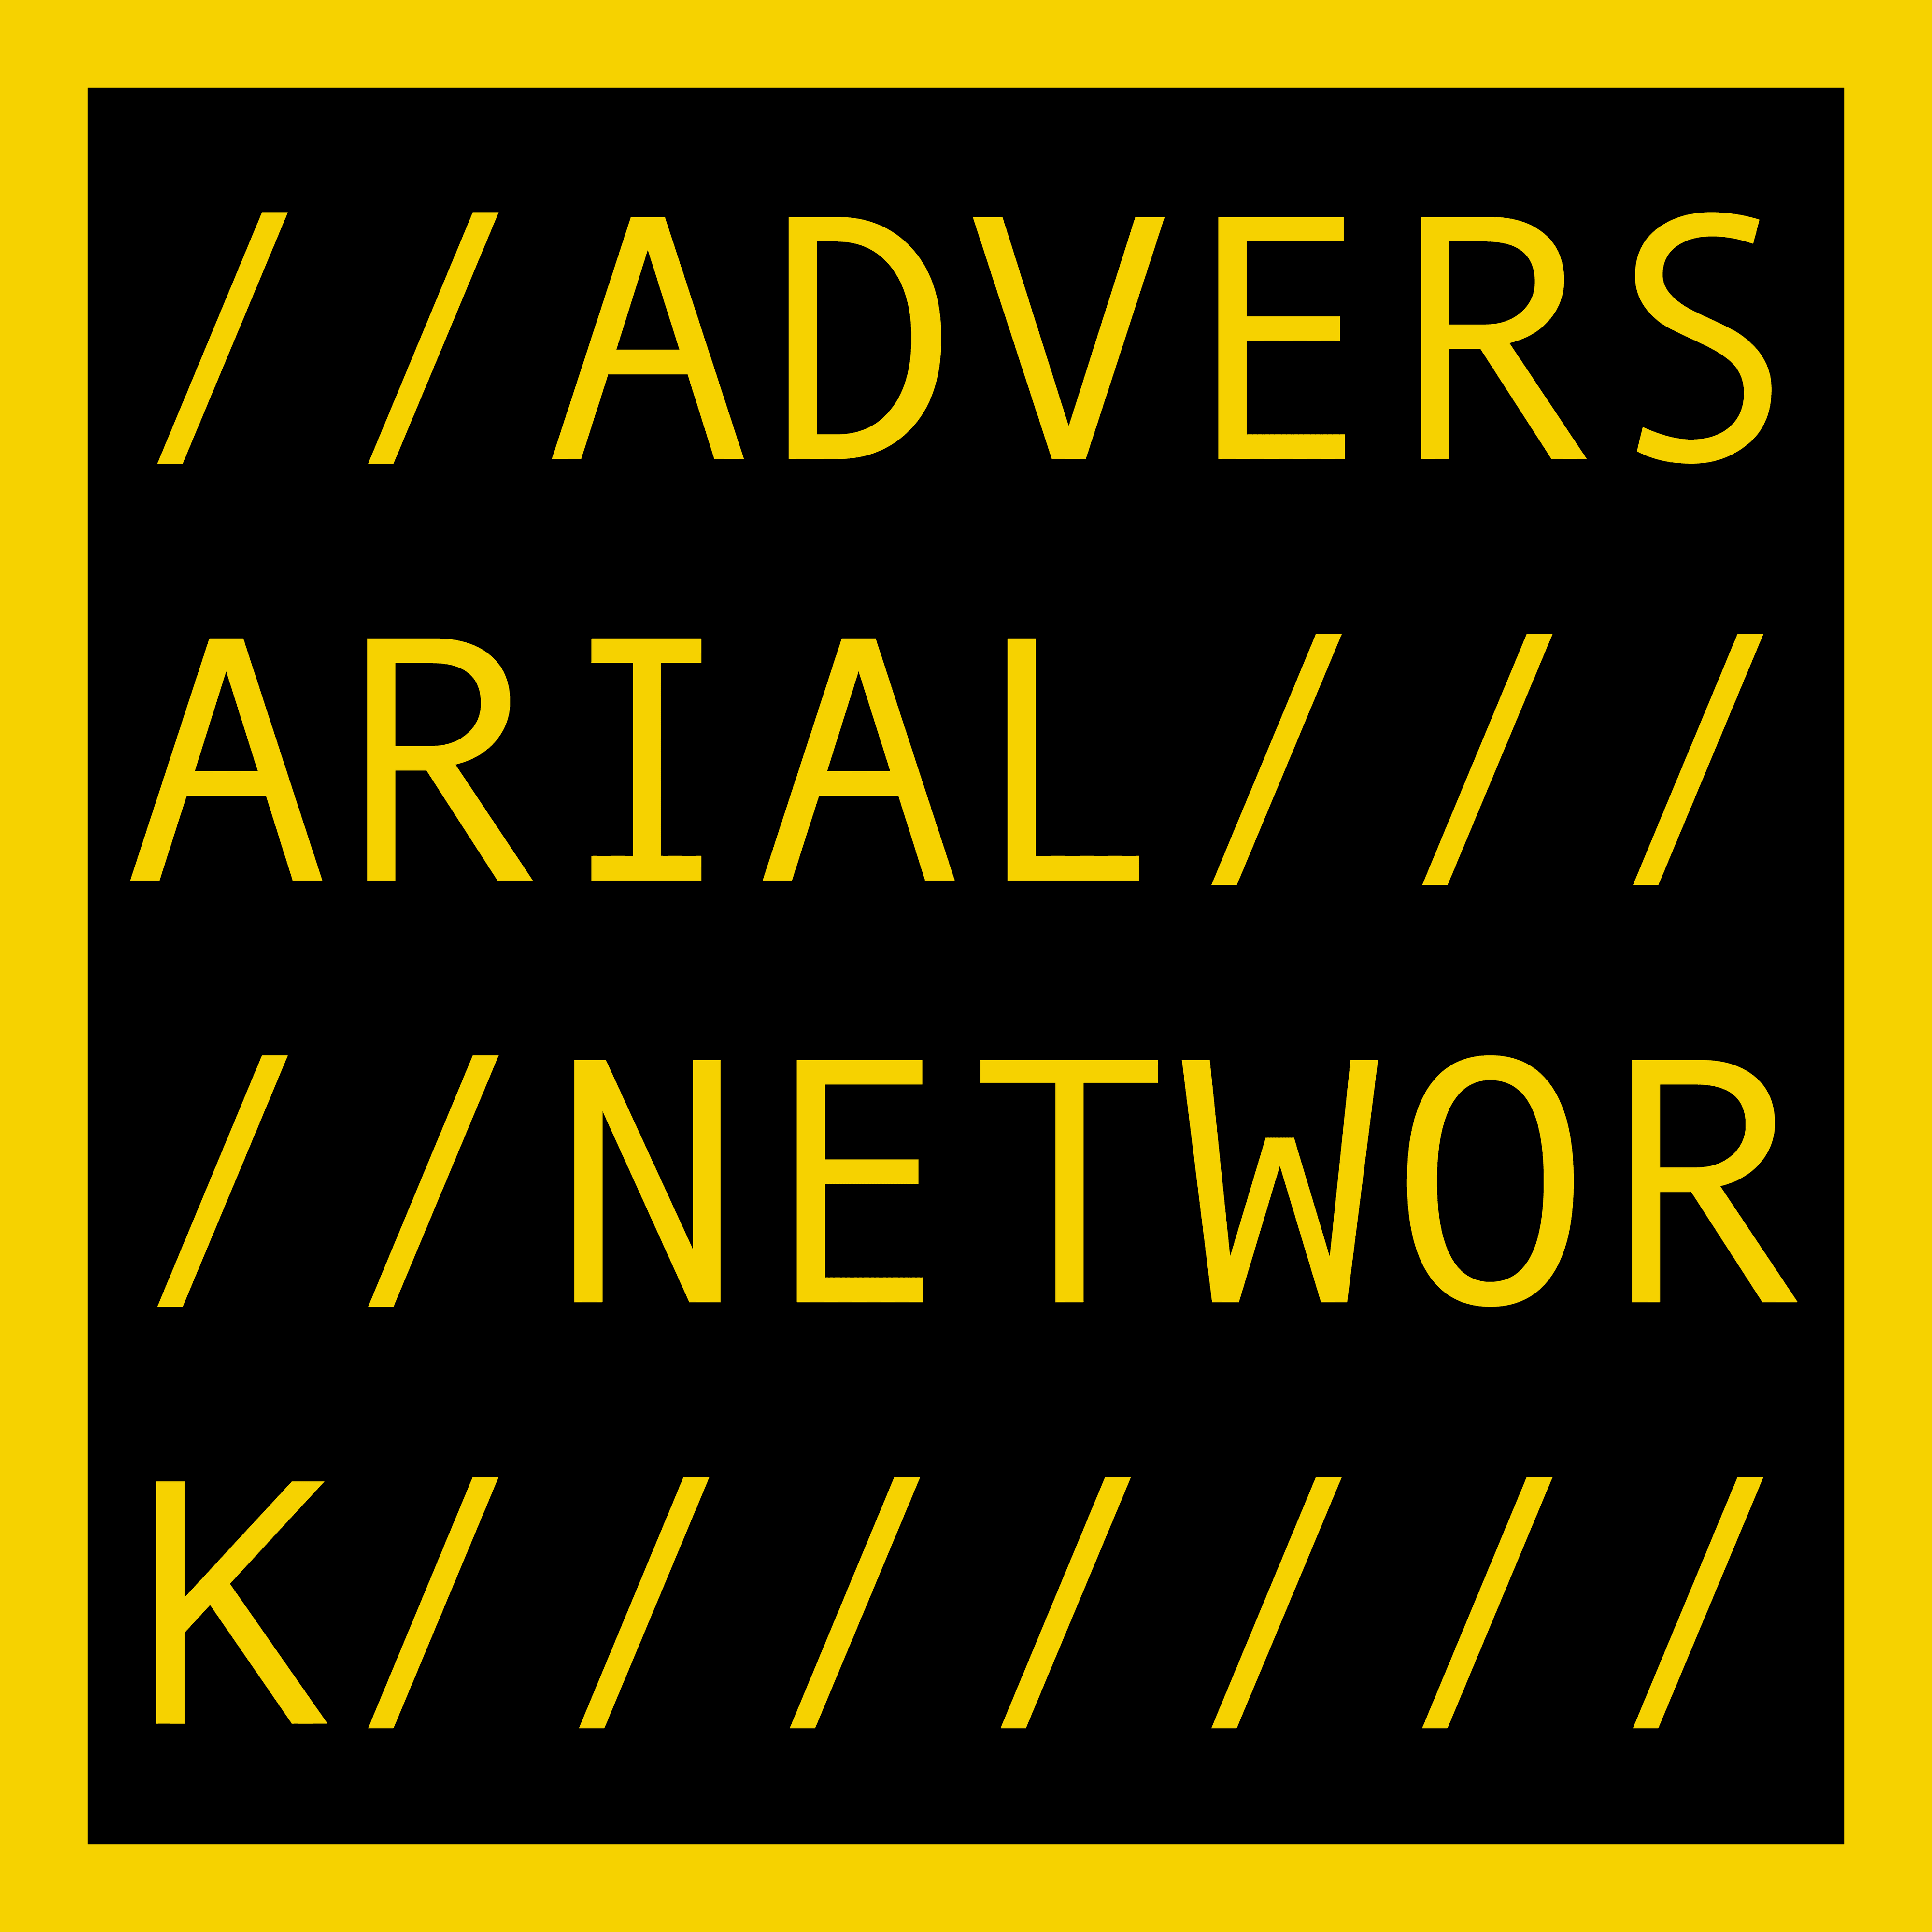 ADVERSARIAL NETWORK